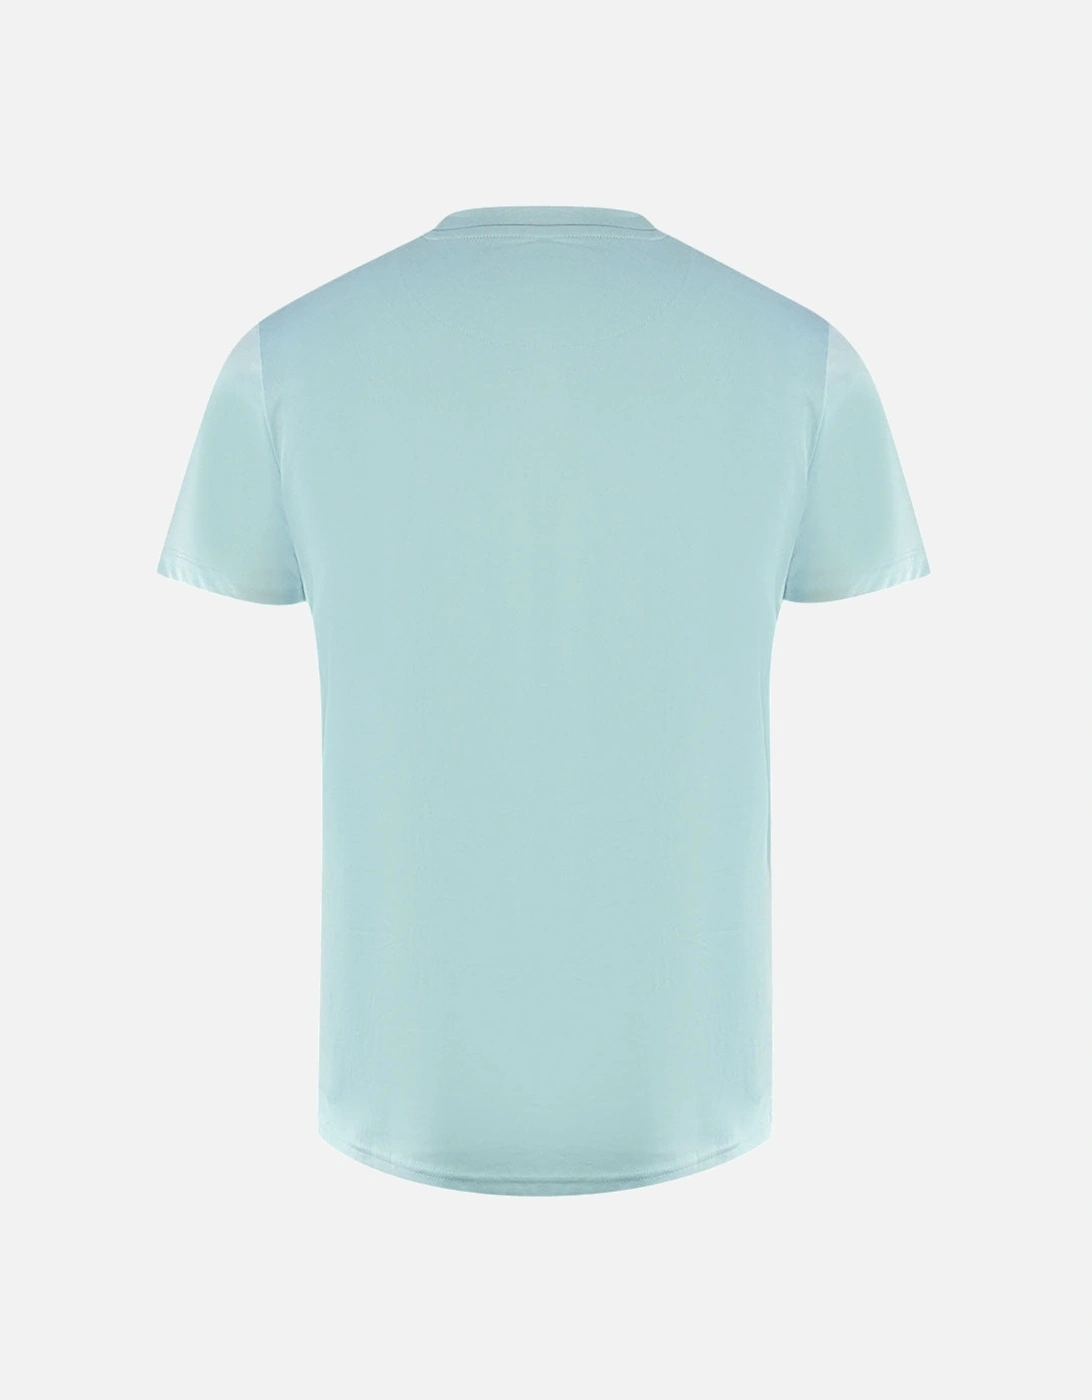 London 1851 Split Logo Sky Blue T-Shirt